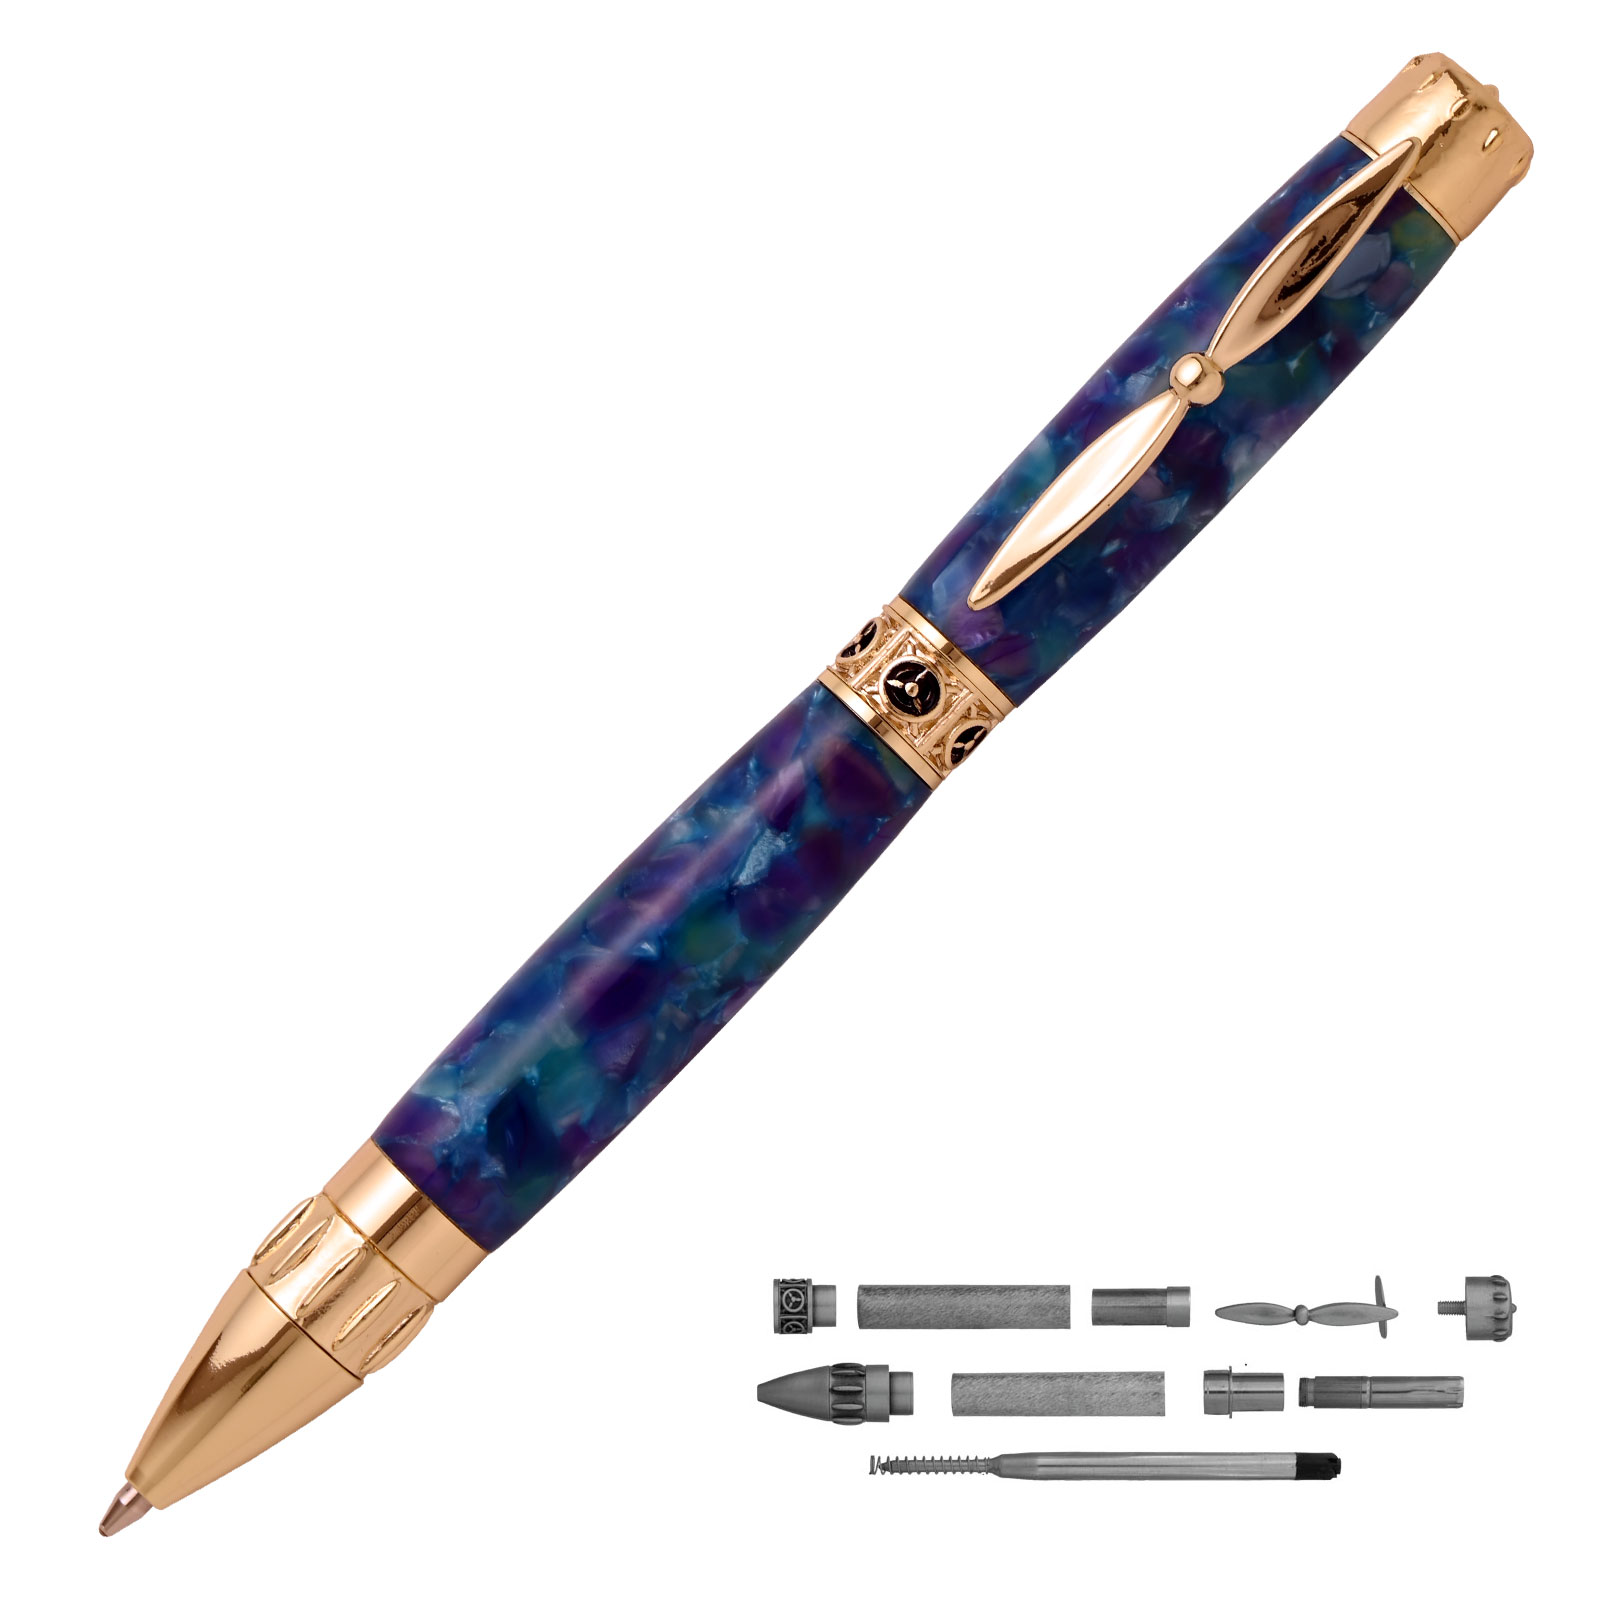 Propeller pen kits by PSI